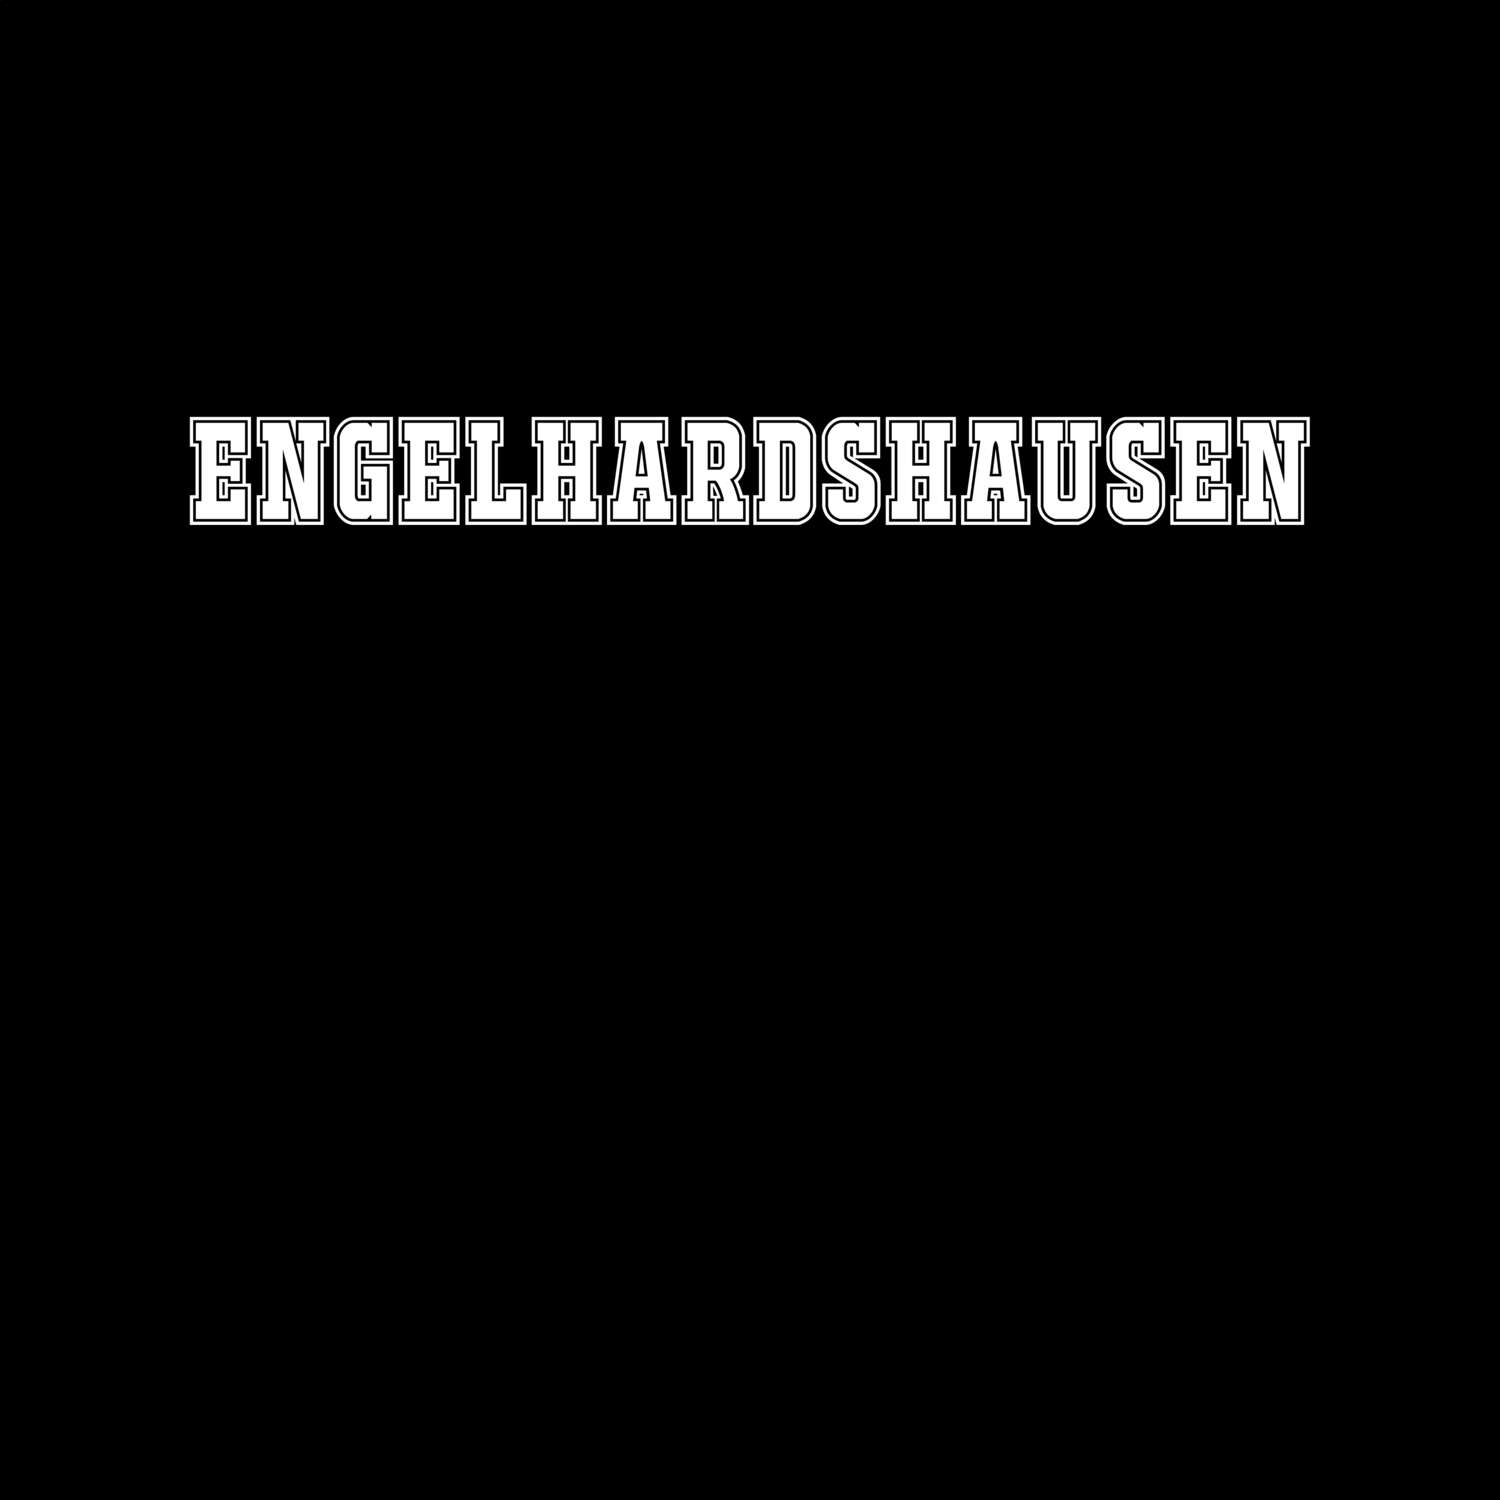 Engelhardshausen T-Shirt »Classic«